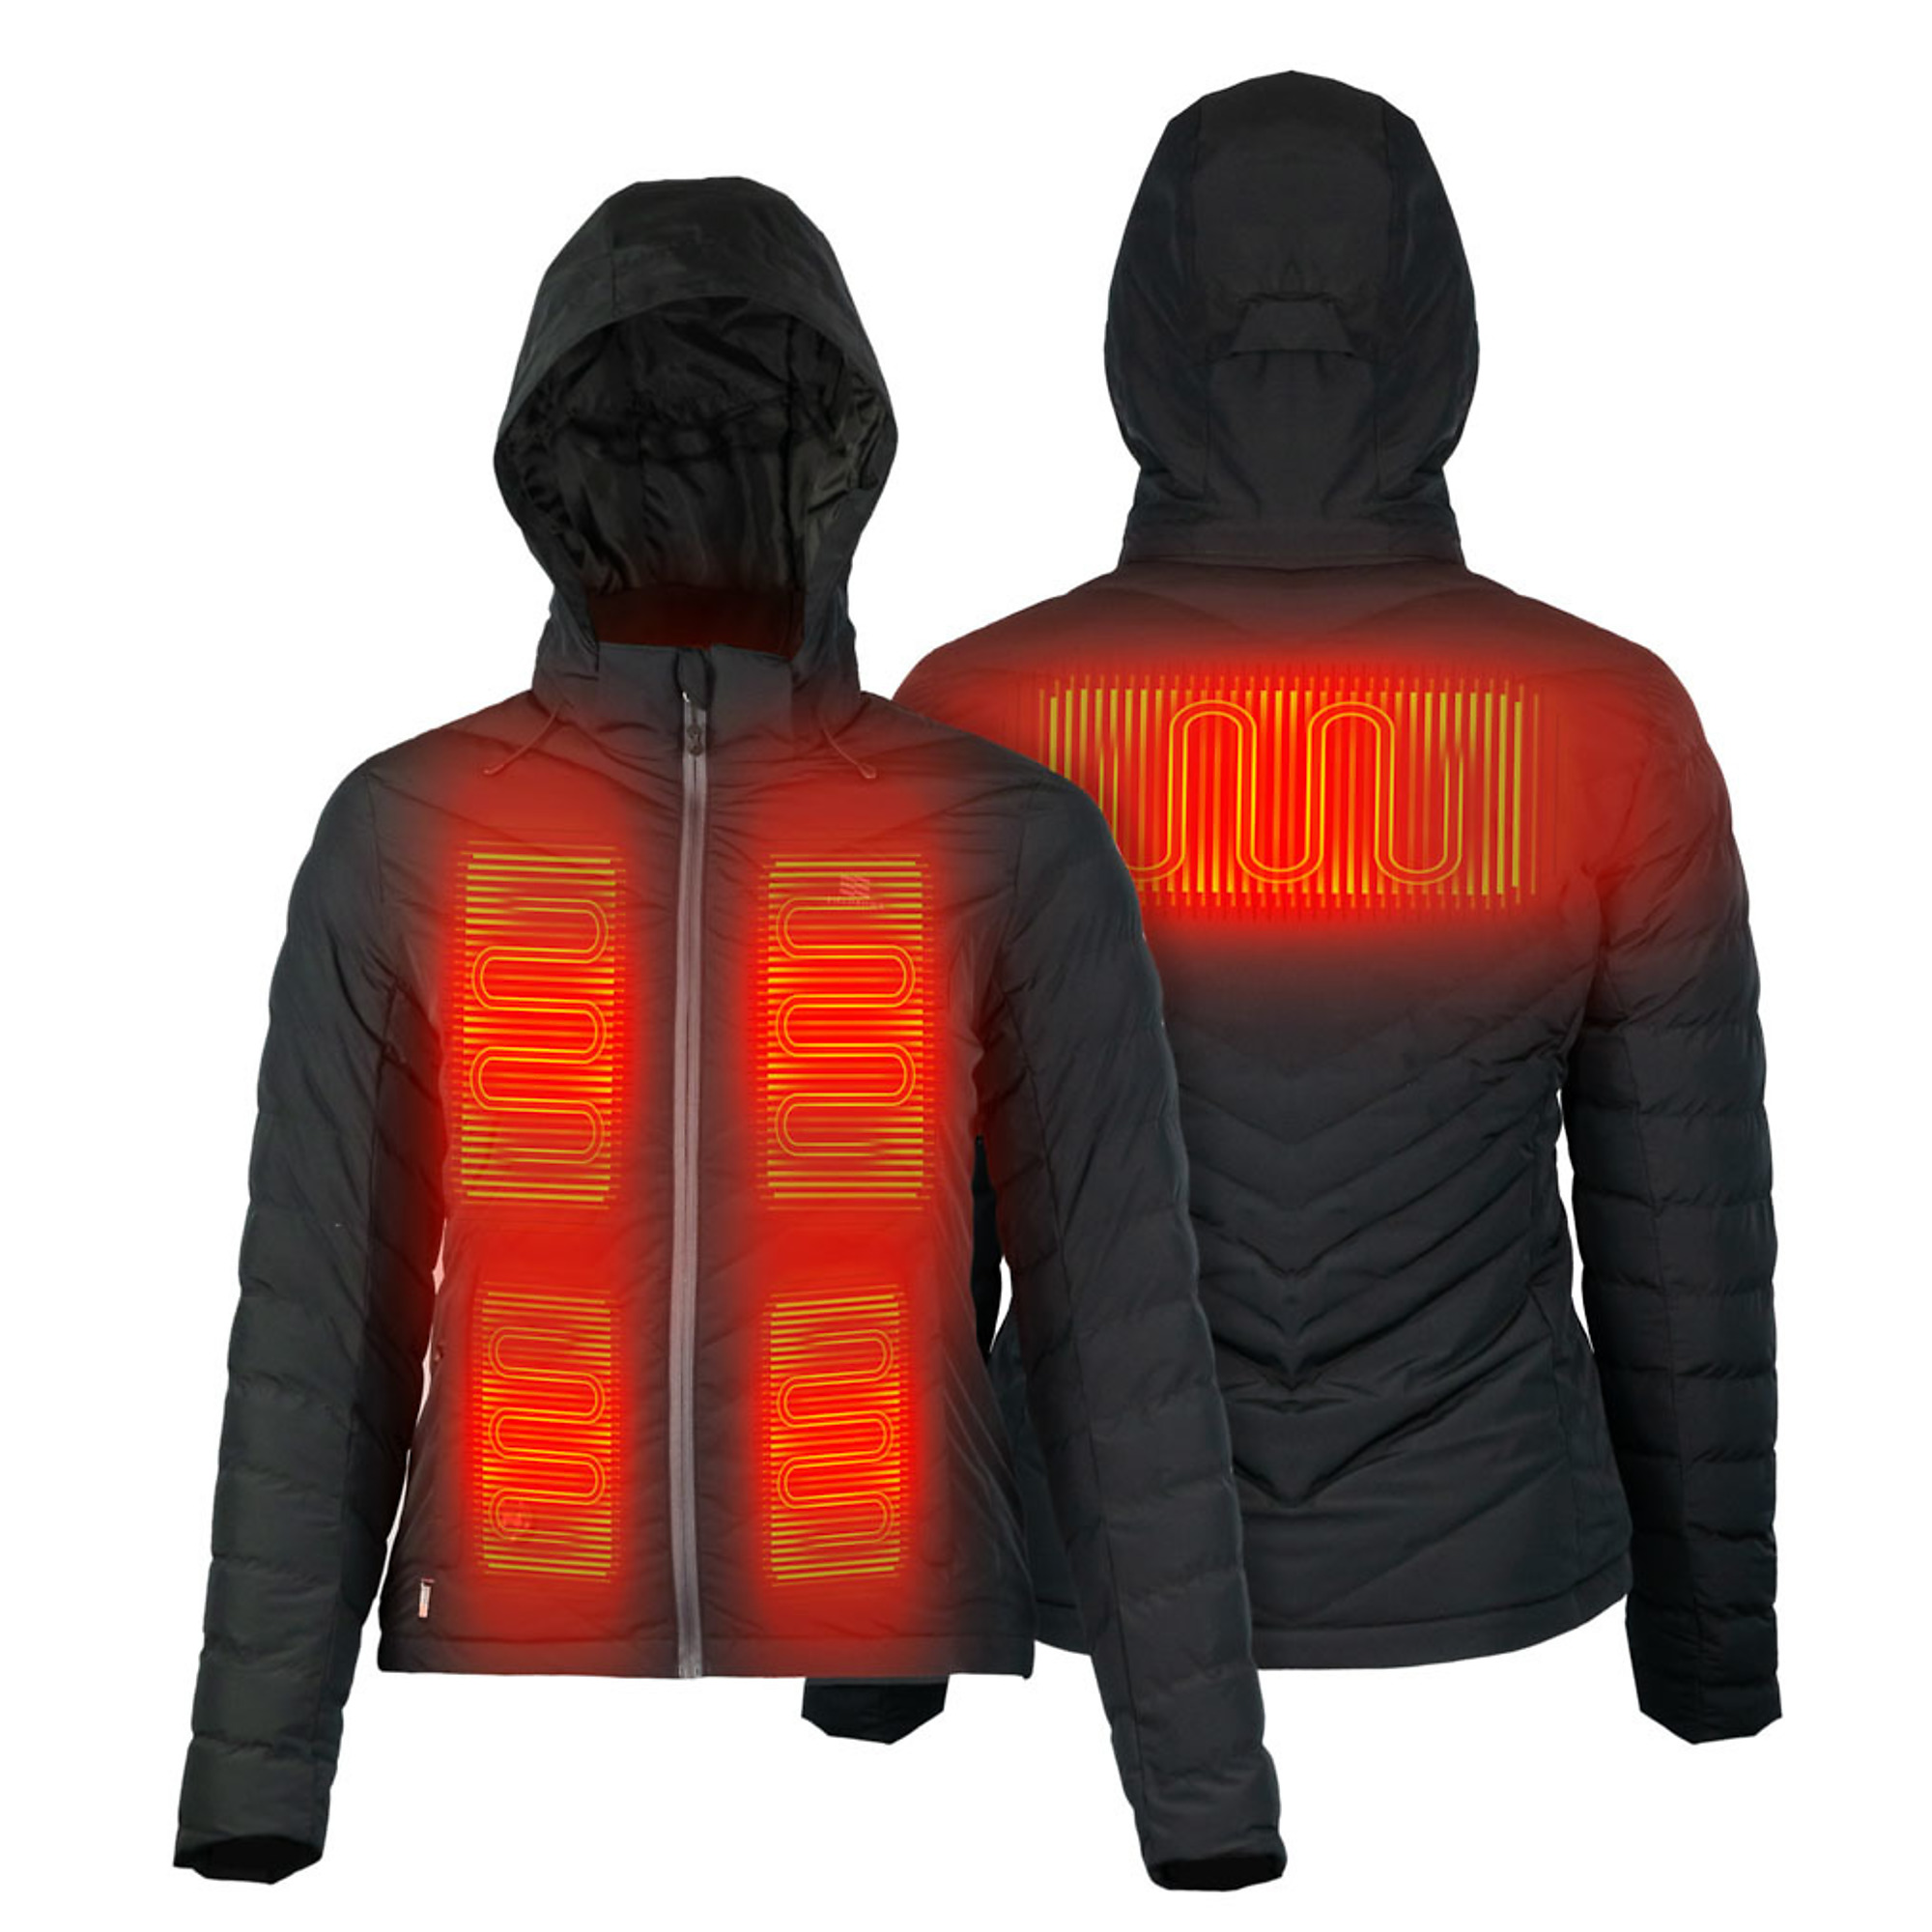 Fieldsheer, Women's Crest Heated Jacket with 7.4v Battery, Size XS, Color Black, Model MWWJ39010122